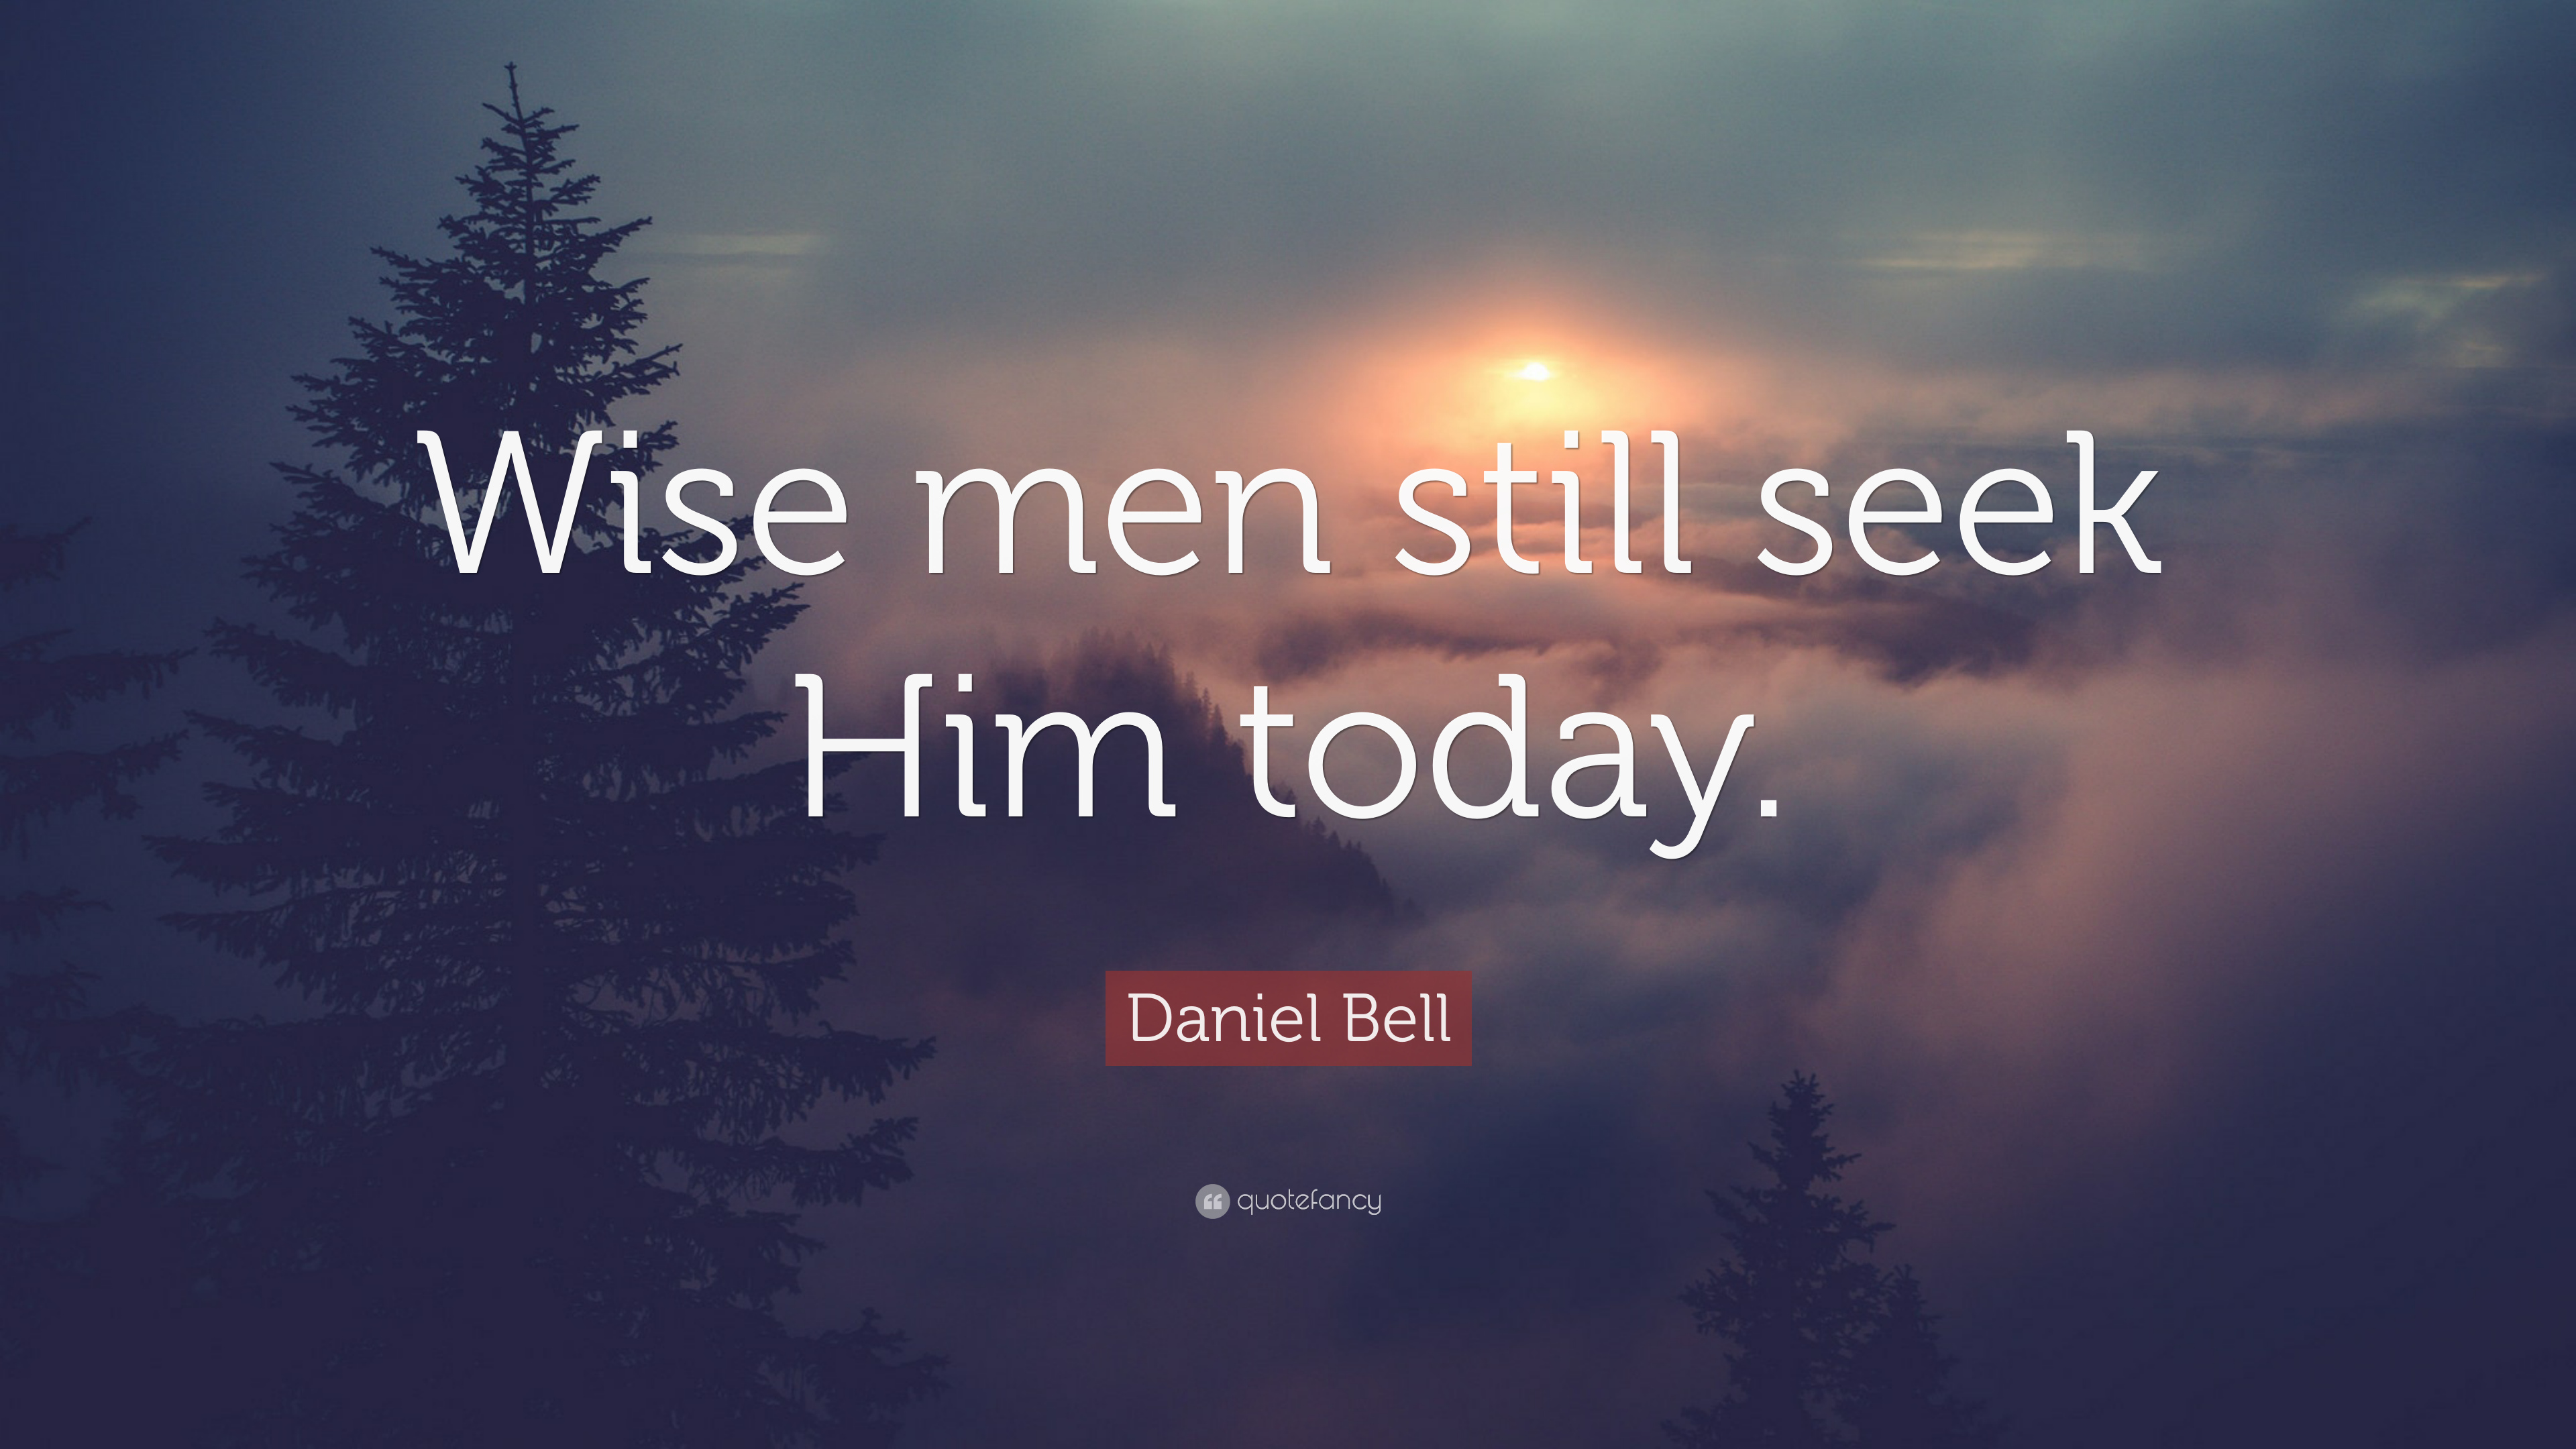 Daniel Bell Quote: “Wise men still seek Him today.” 7